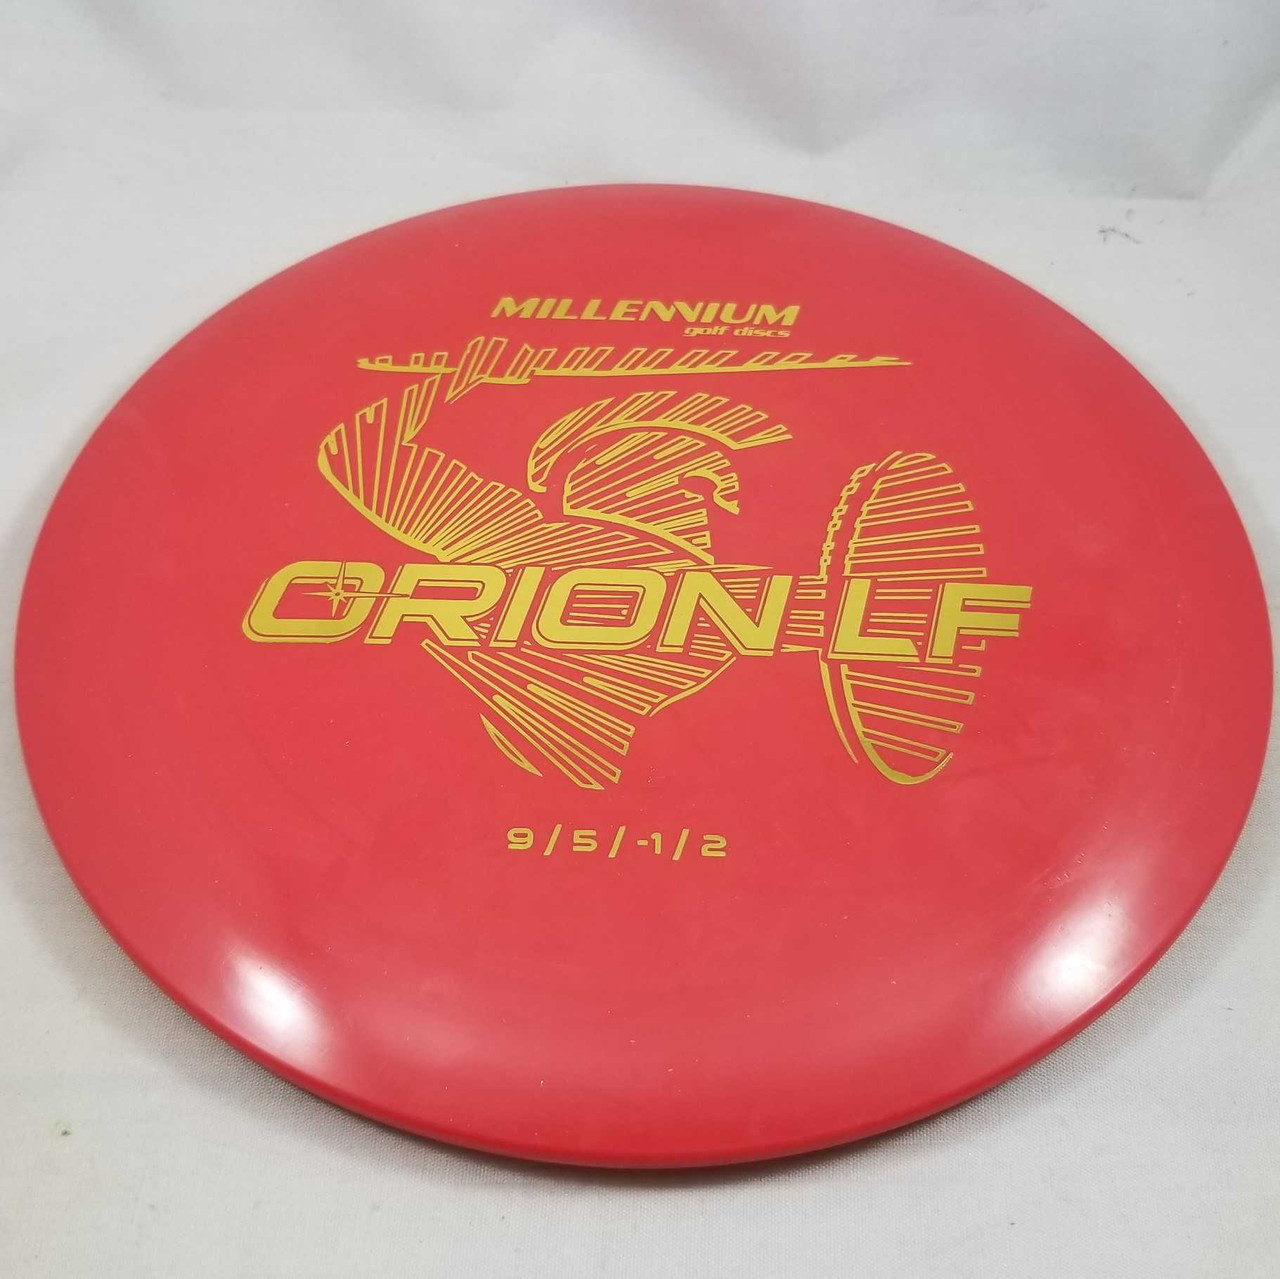 Millennium Orion LF Red-Gold 174g